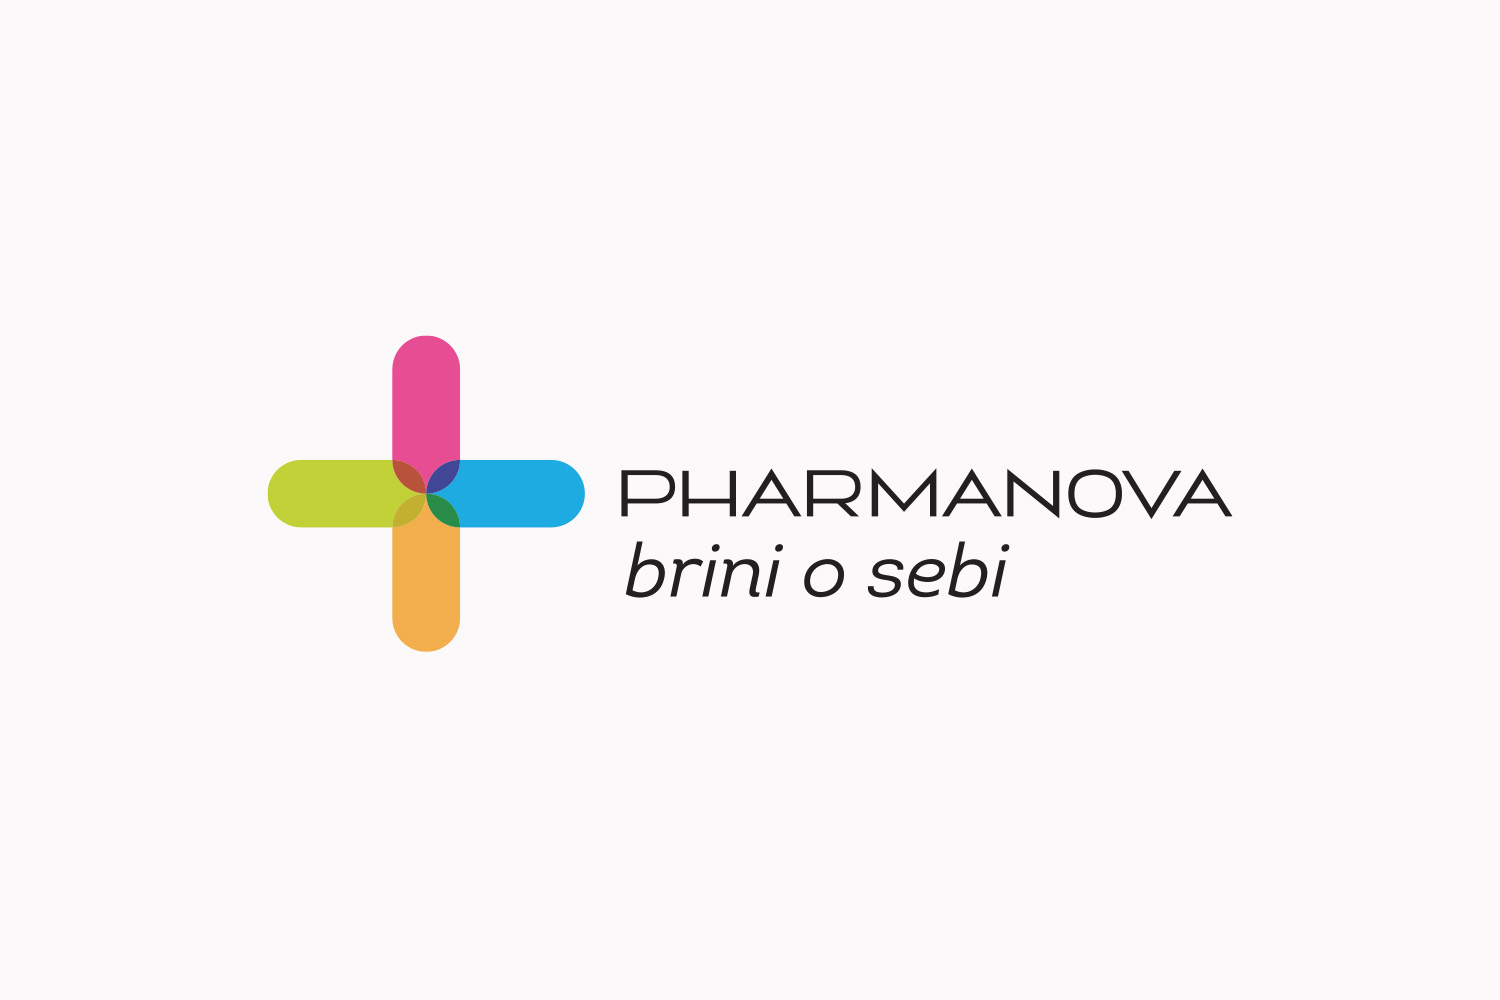 Pharmanova